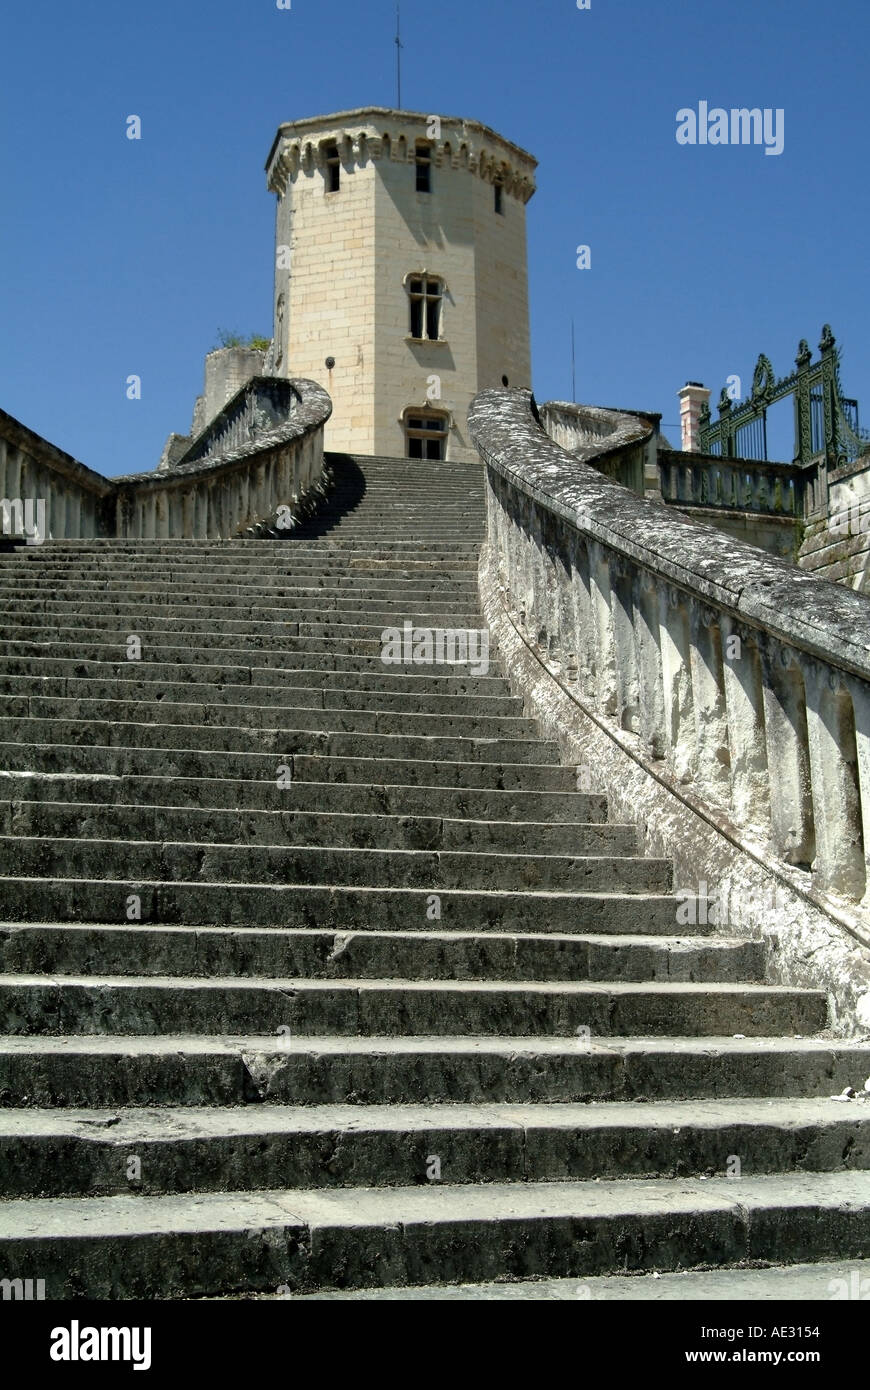 Francia Loir et Cher st aignan escalera del palacio renacentista del siglo XVI. Foto de stock